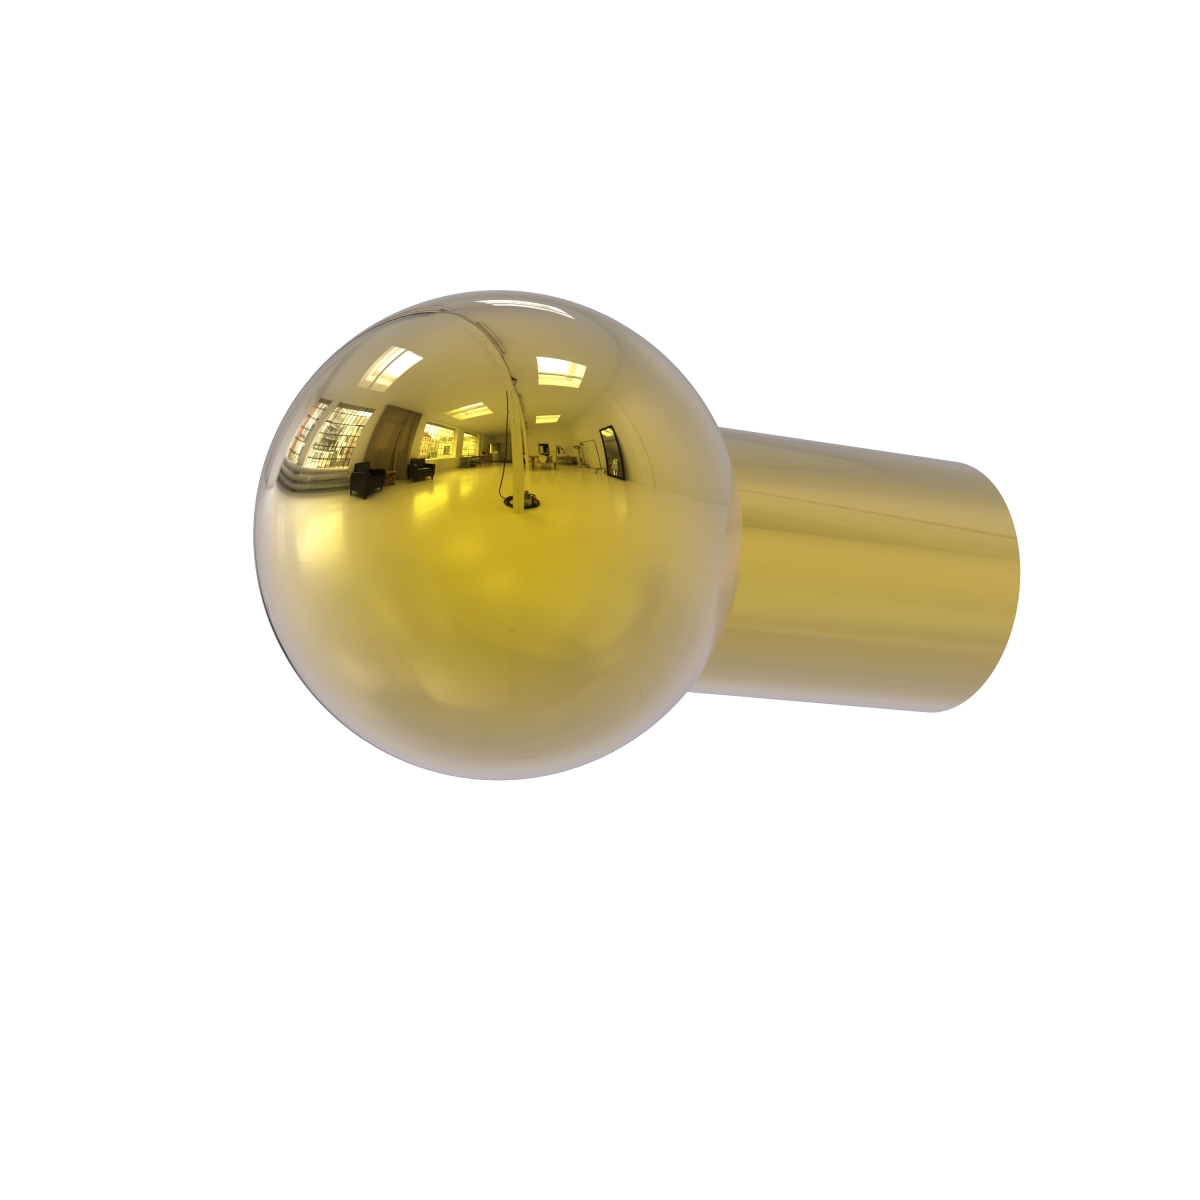 C-10-unl 1.25 In. Cabinet Hardware Knob, Unlacquered Brass